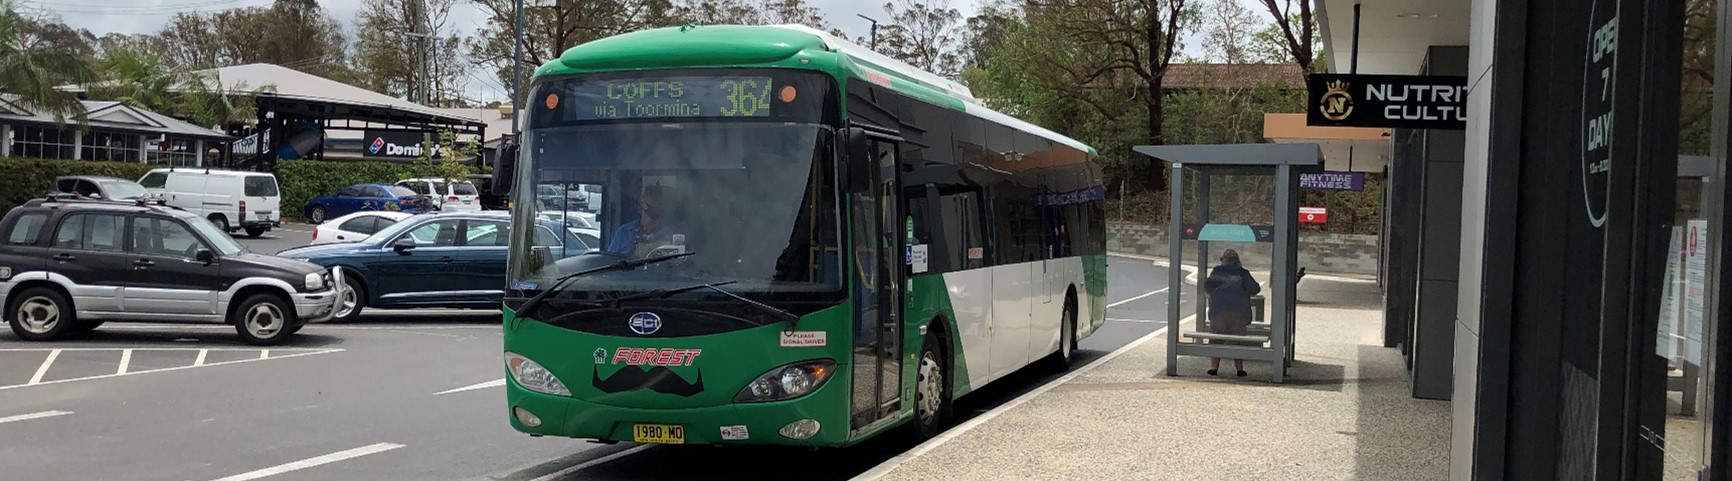 Forest coachlines bus at Coffs Harbour